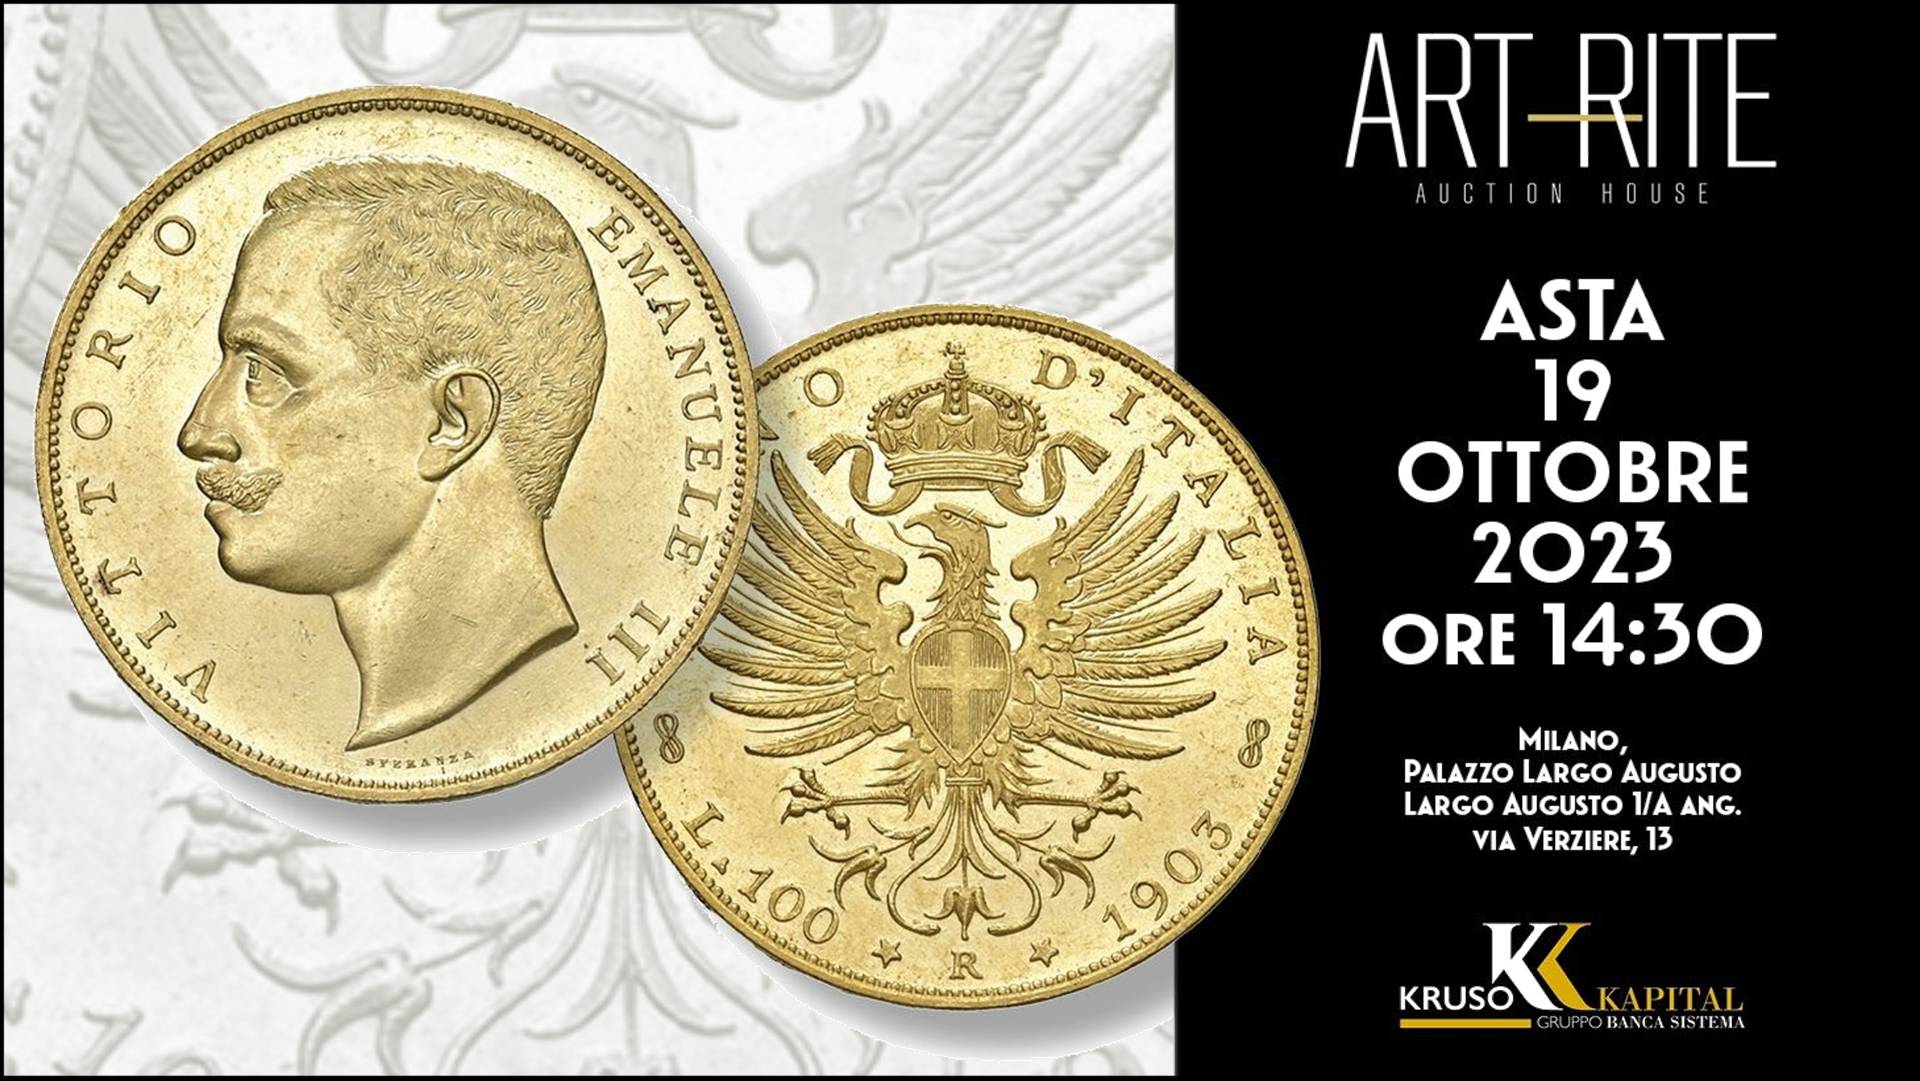 asta numismatica art-rite milano monete medaglie rarità oro argento medaglie